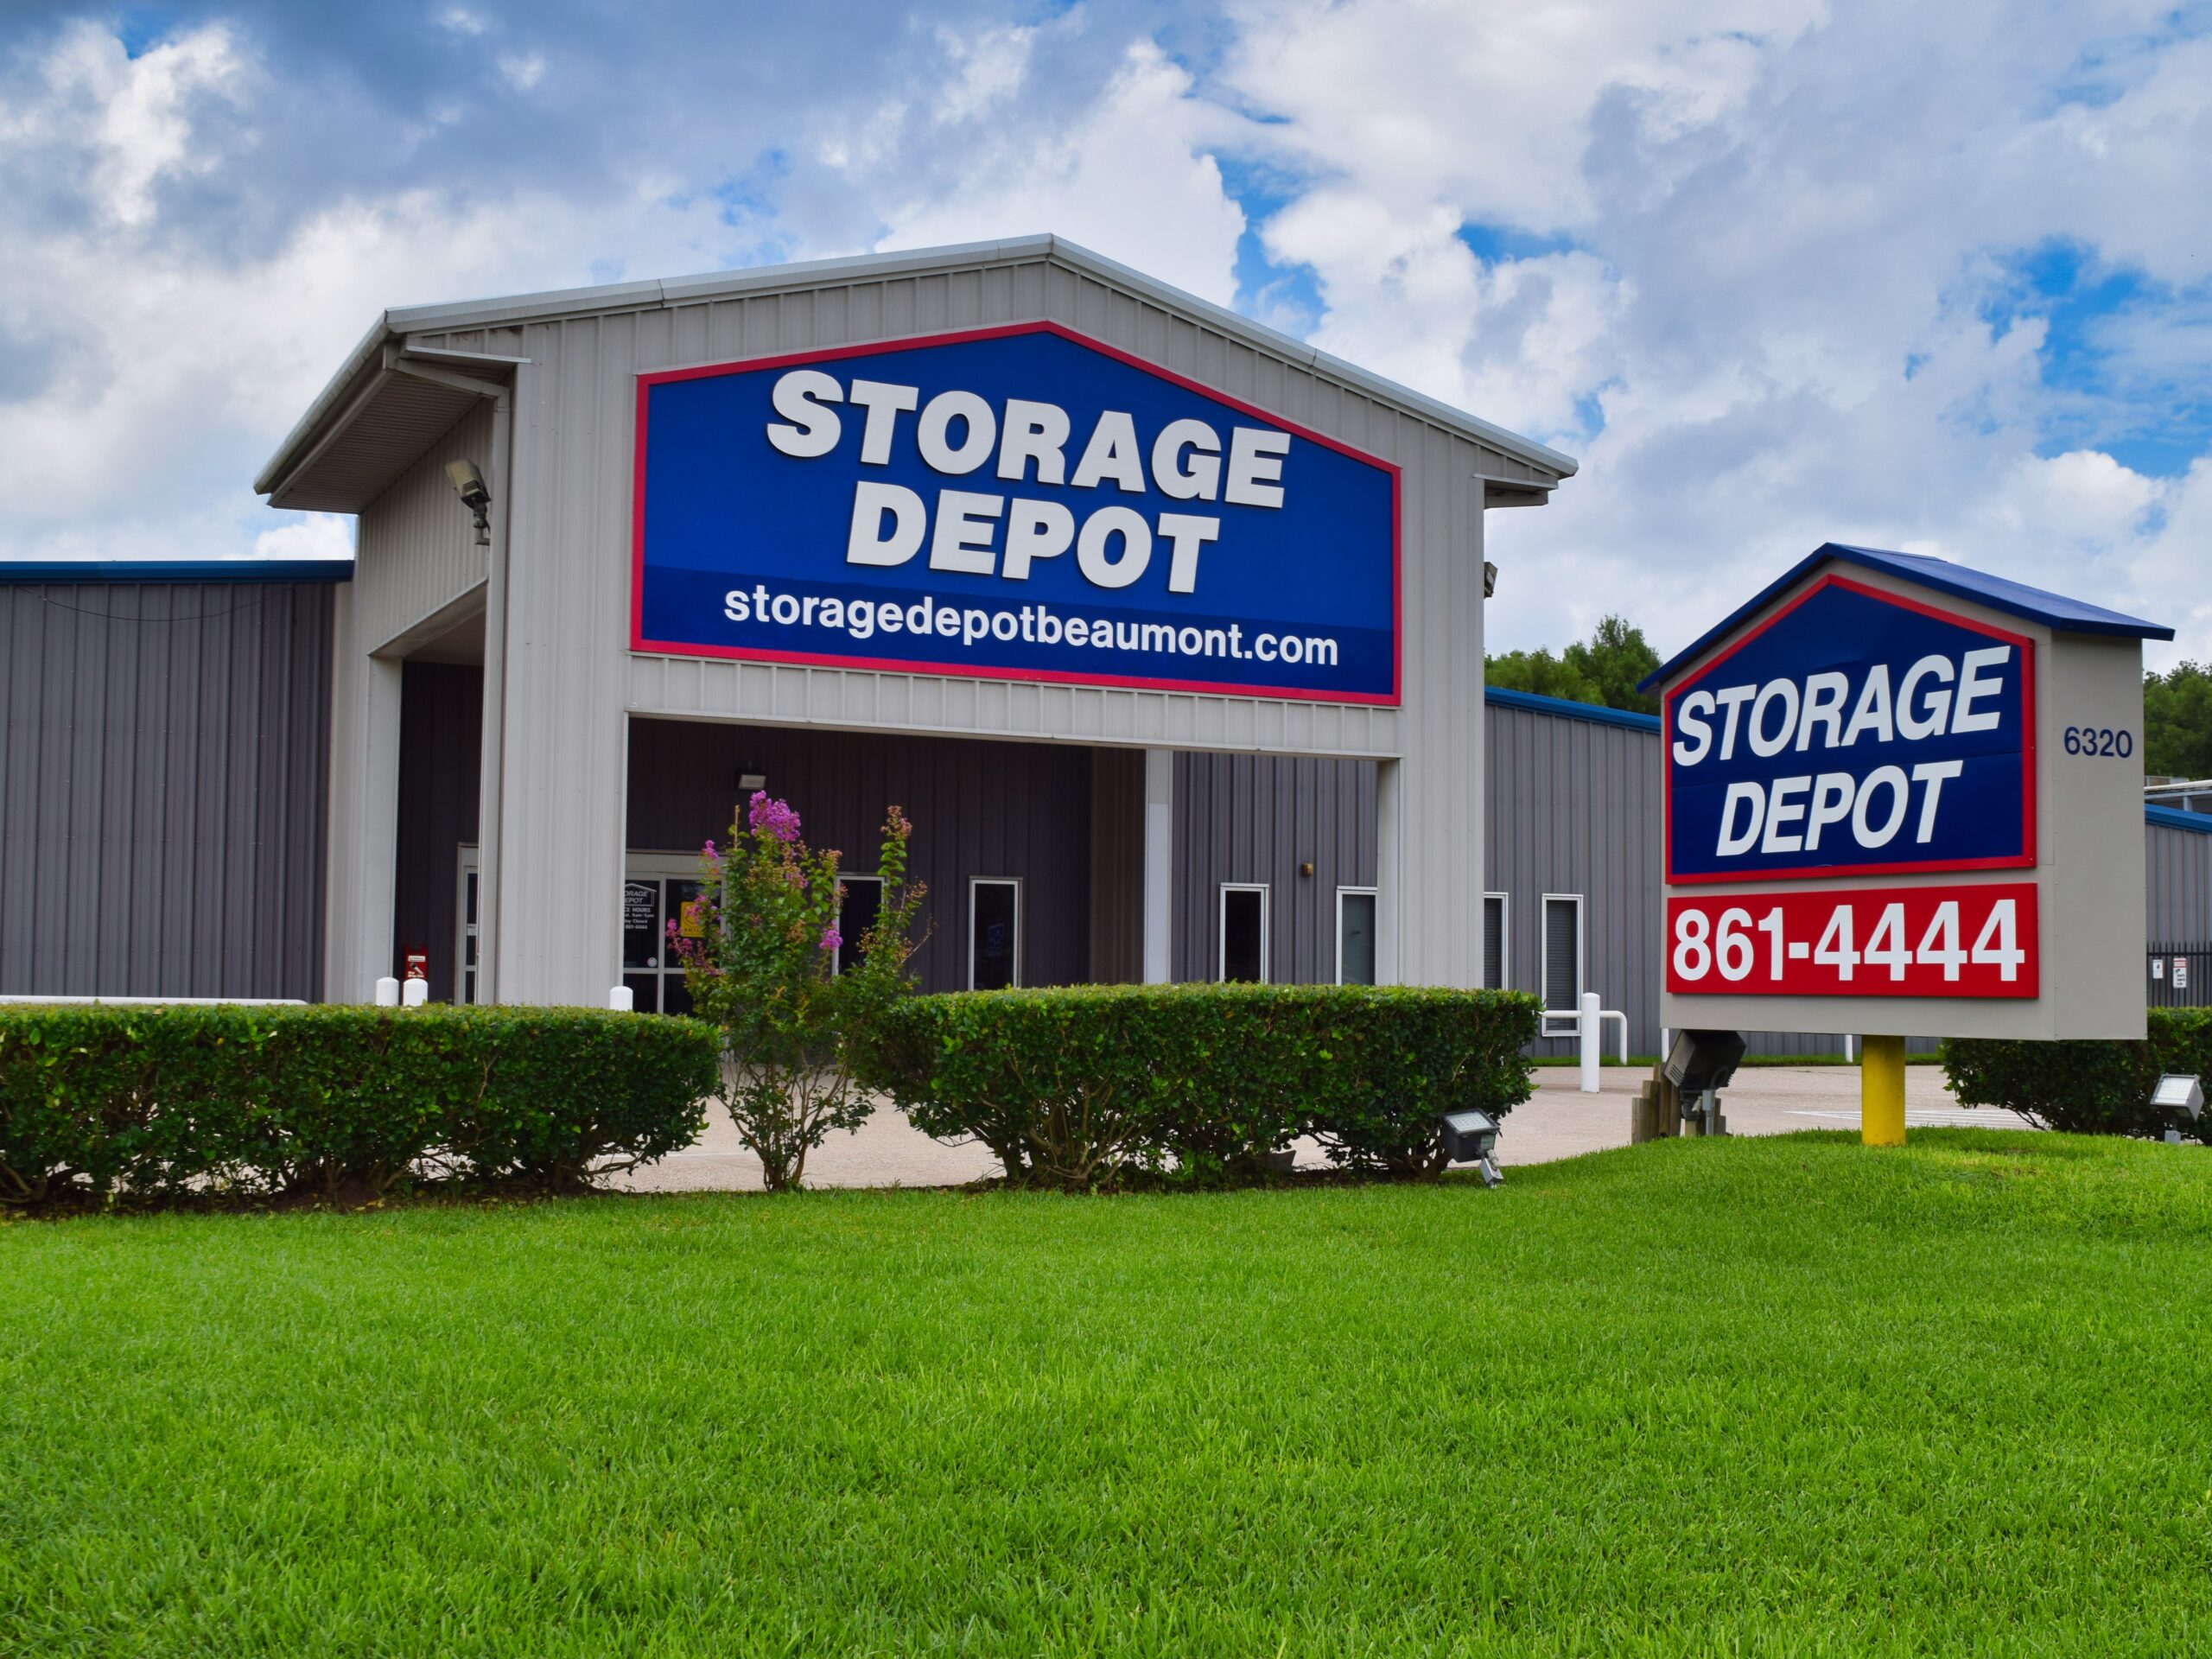 Storage Depot - Self Storage Facility For Sale by The Karr Self Storage Team